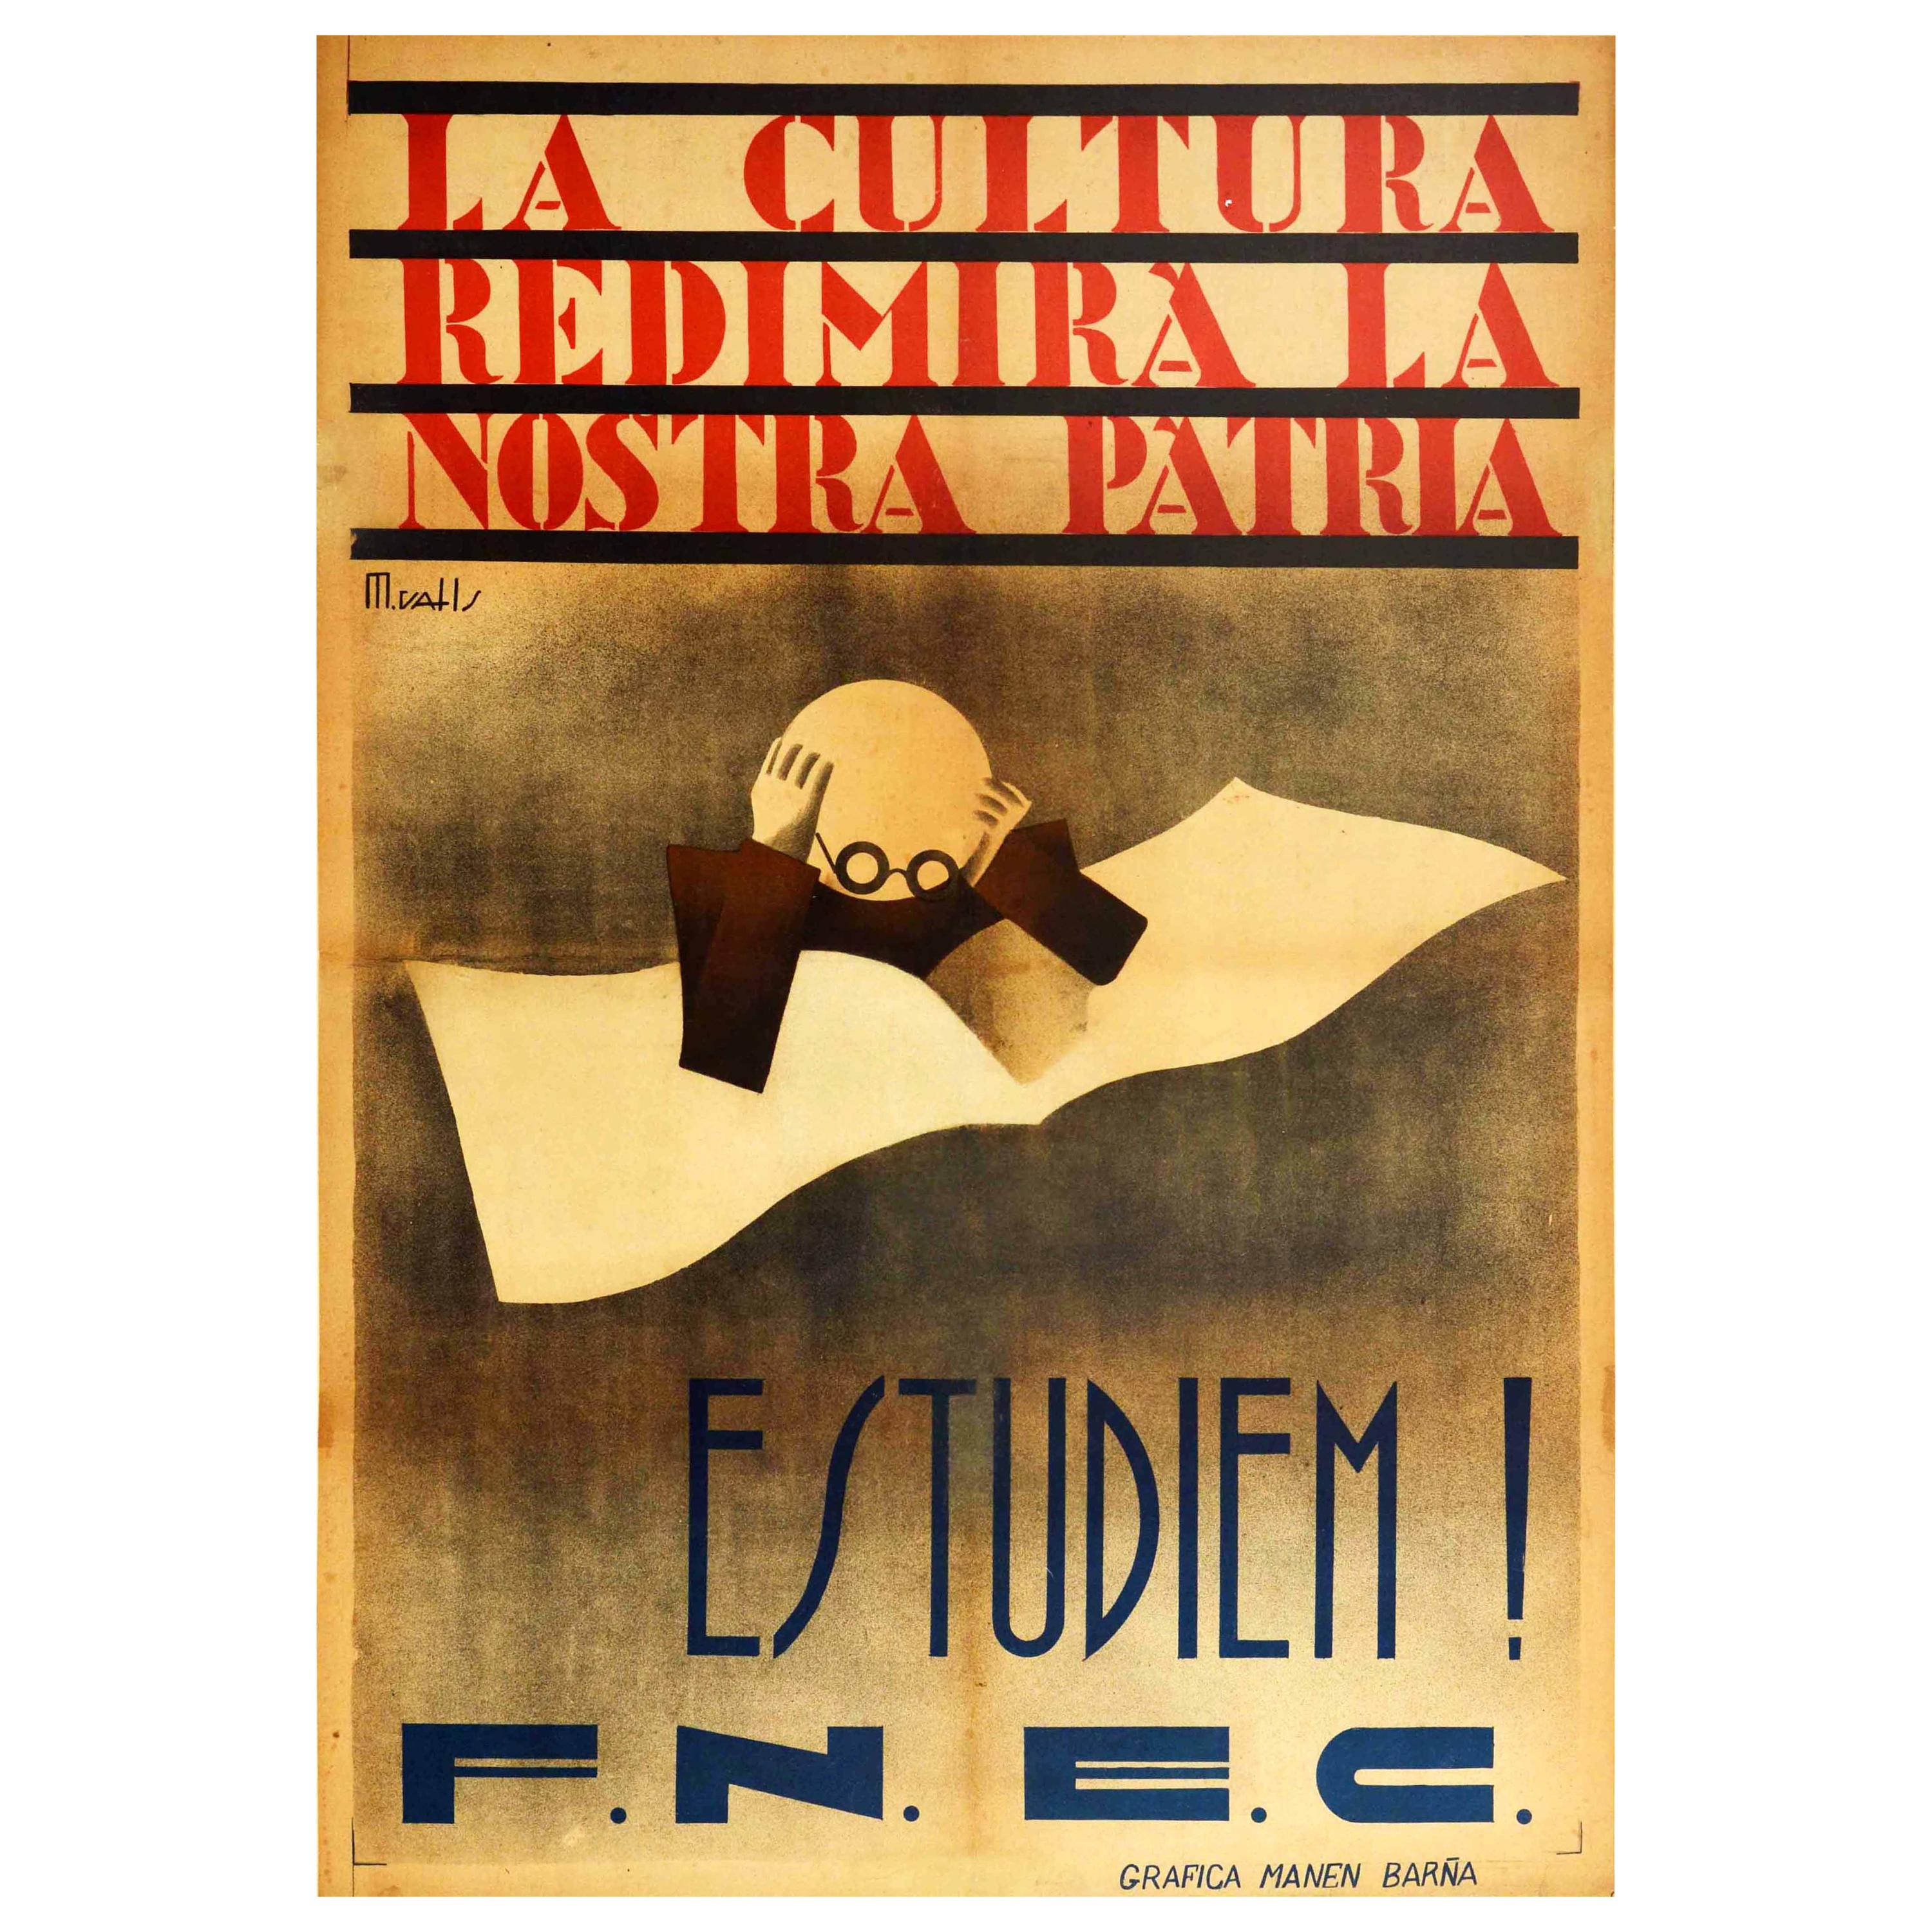 Original Vintage Poster Student Culture Our Homeland Let's Study Civil War Spain